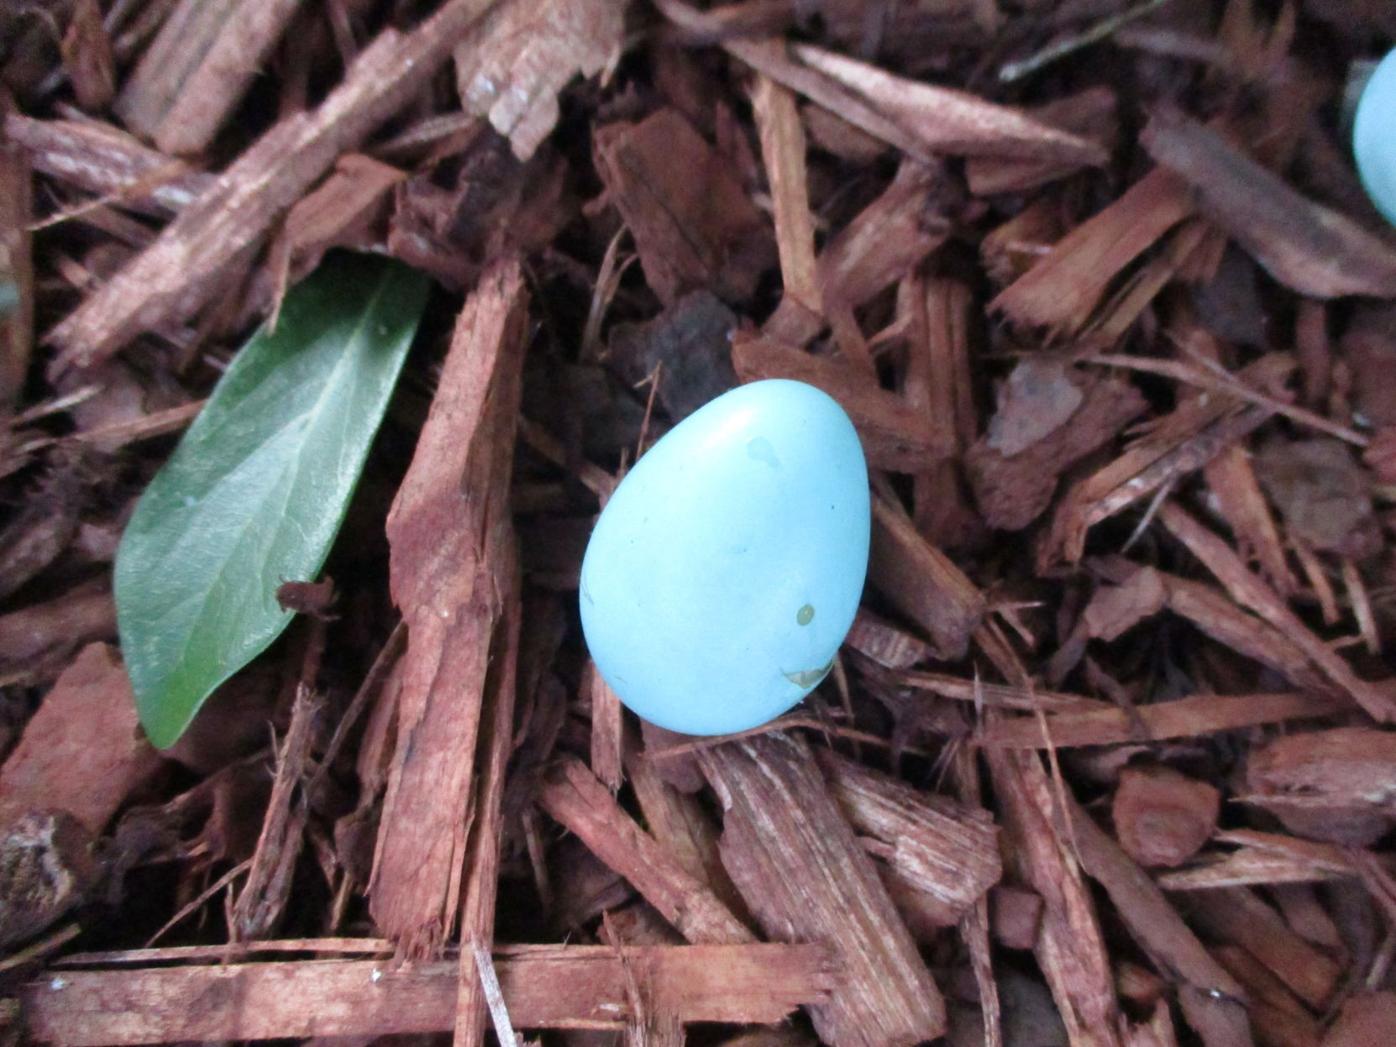 baby parakeet eggs